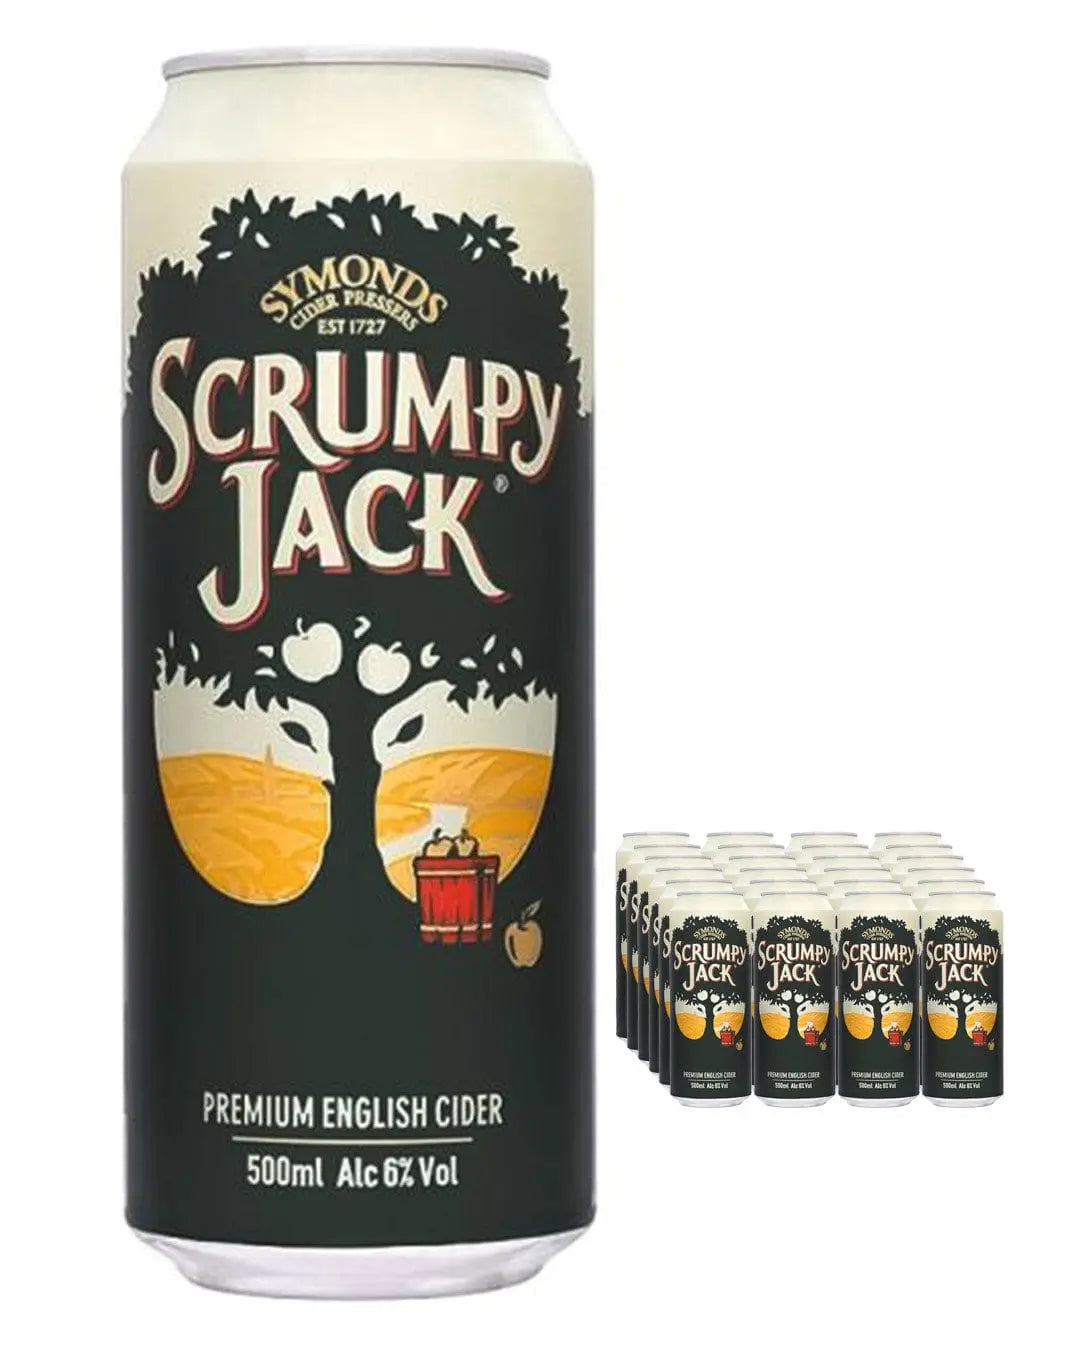 Scrumpy Jack Cider Cans Multipack, 24 x 500 ml Cider